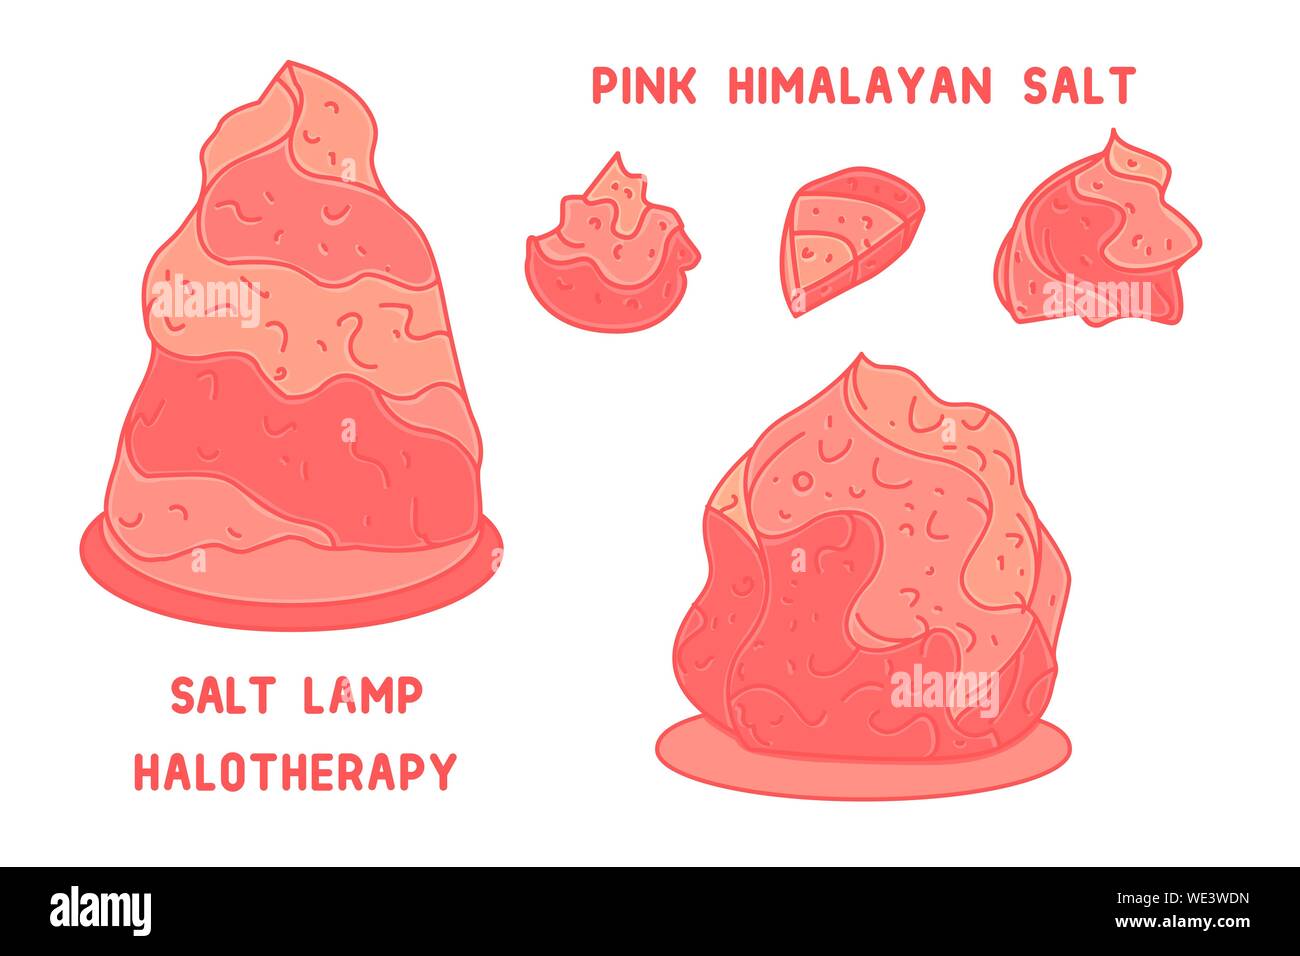 Himalayan salt stones illustrations set. Salt lamp and salt crystals. Alternative medicine logo or design of a relaxing room Stock Vector